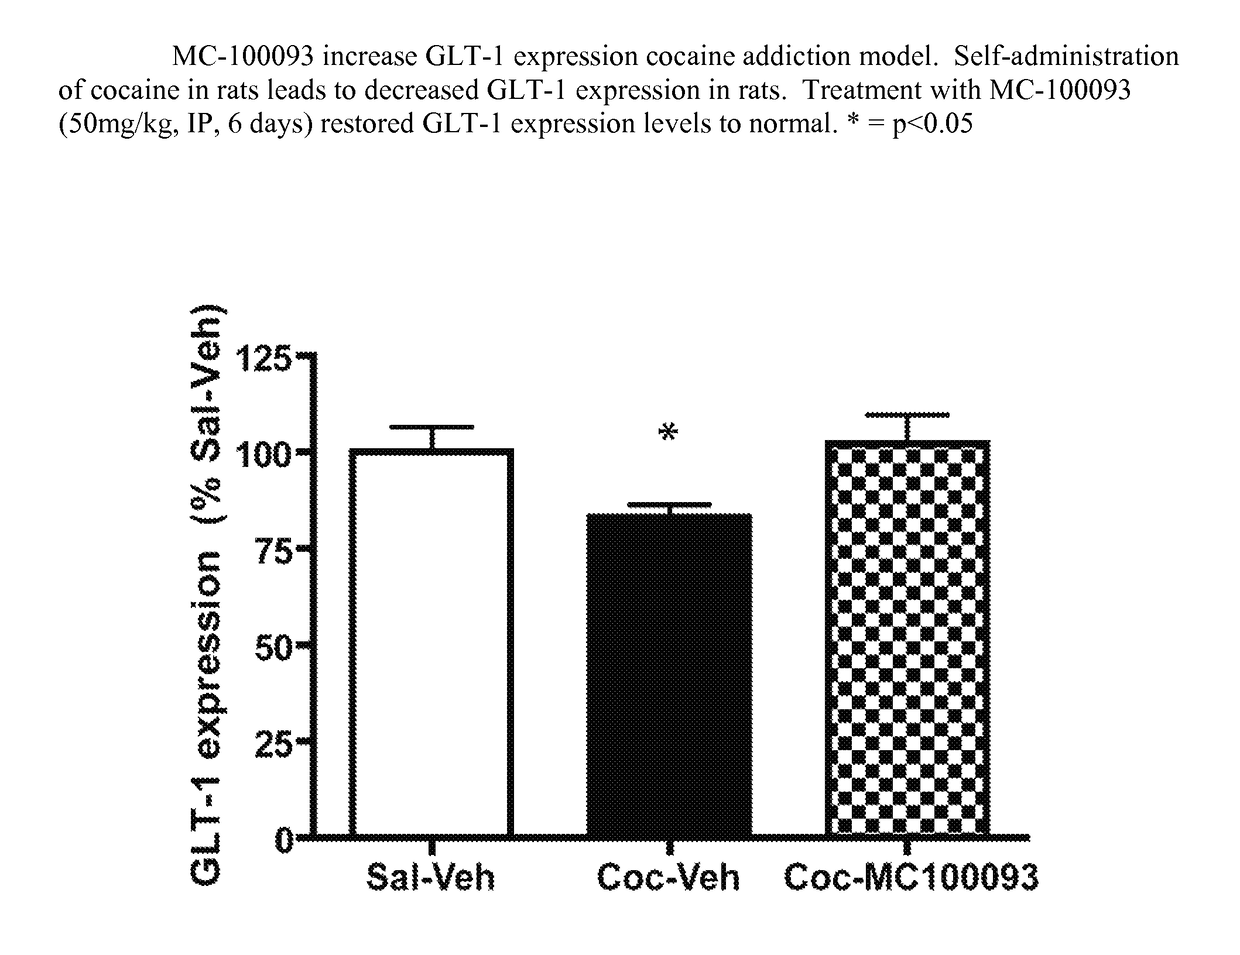 Beta lactams as modulators of glutamate uptake and methods for use thereof